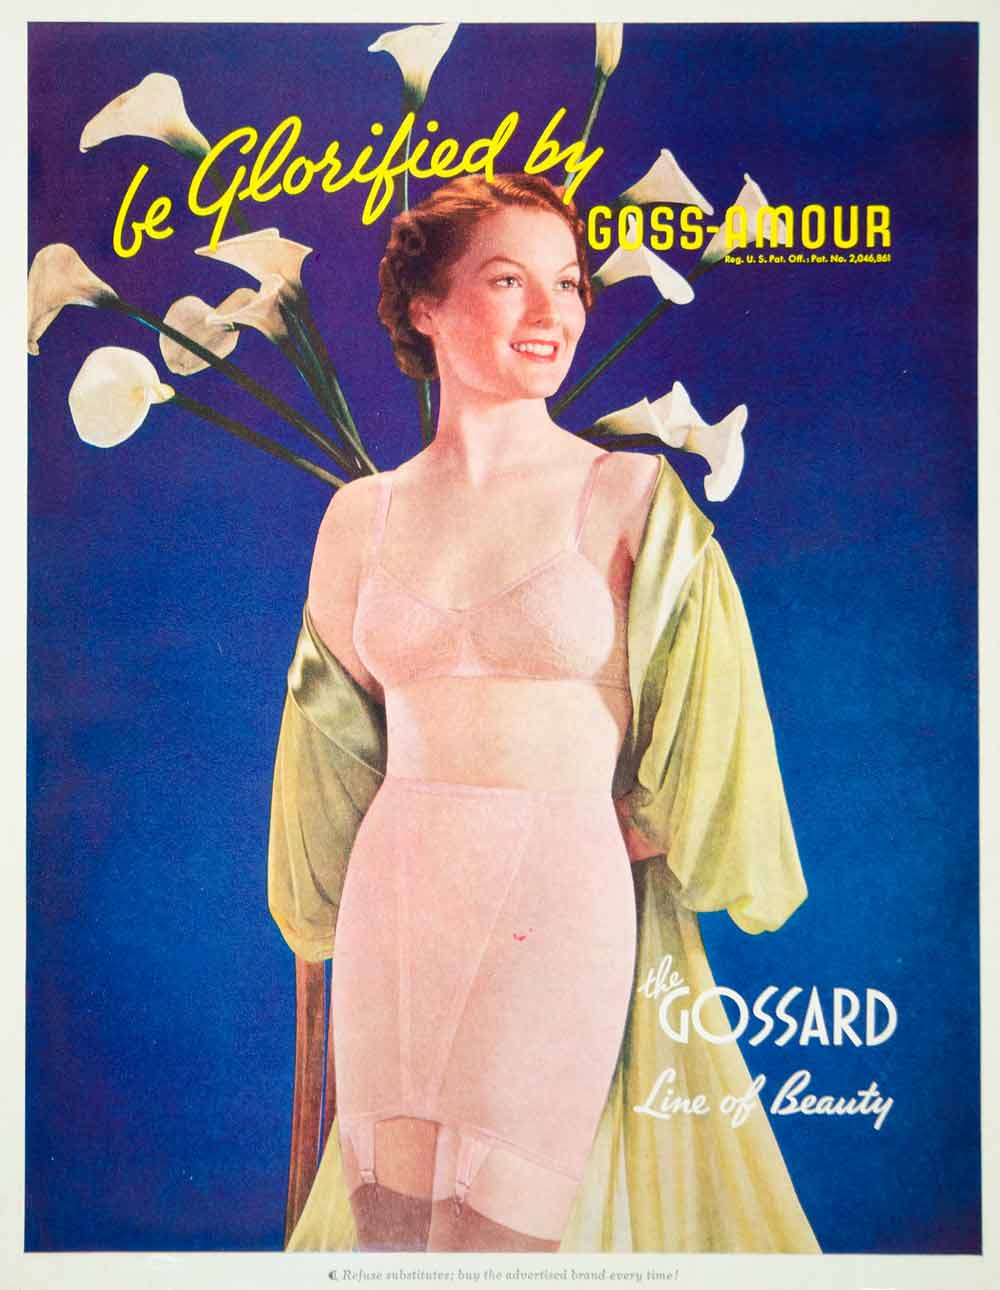 1937 Ad Vintage Gossard Lingerie Bra Girdle Corset Goss-Amour